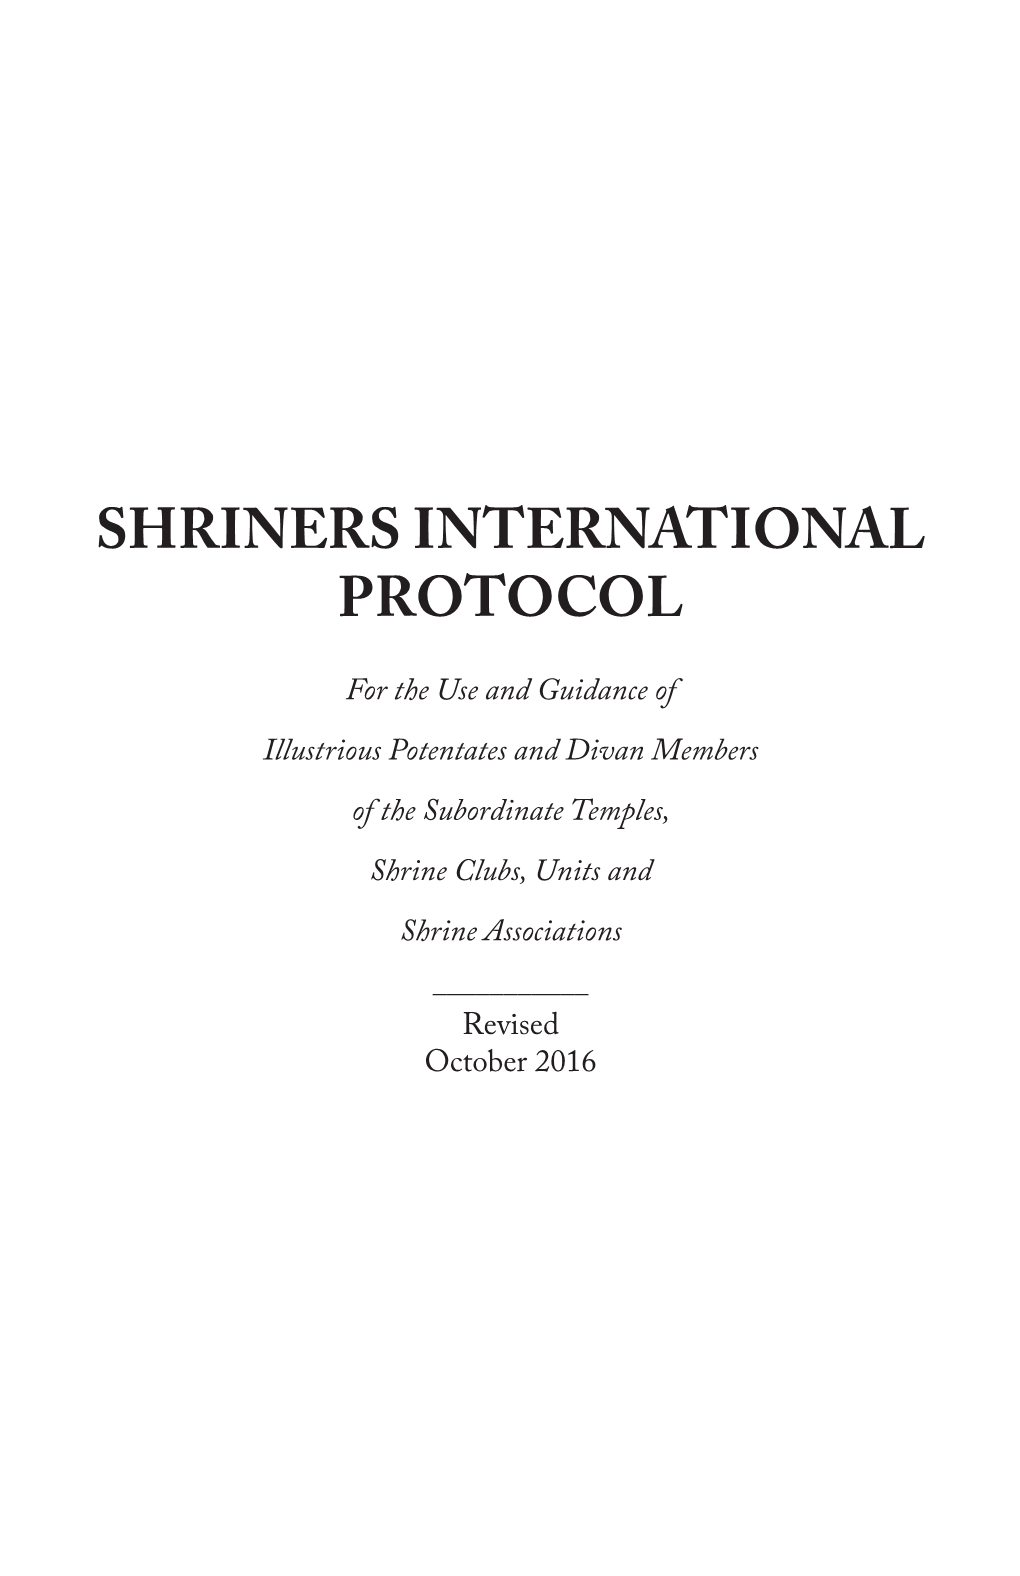 Shriners International Protocol